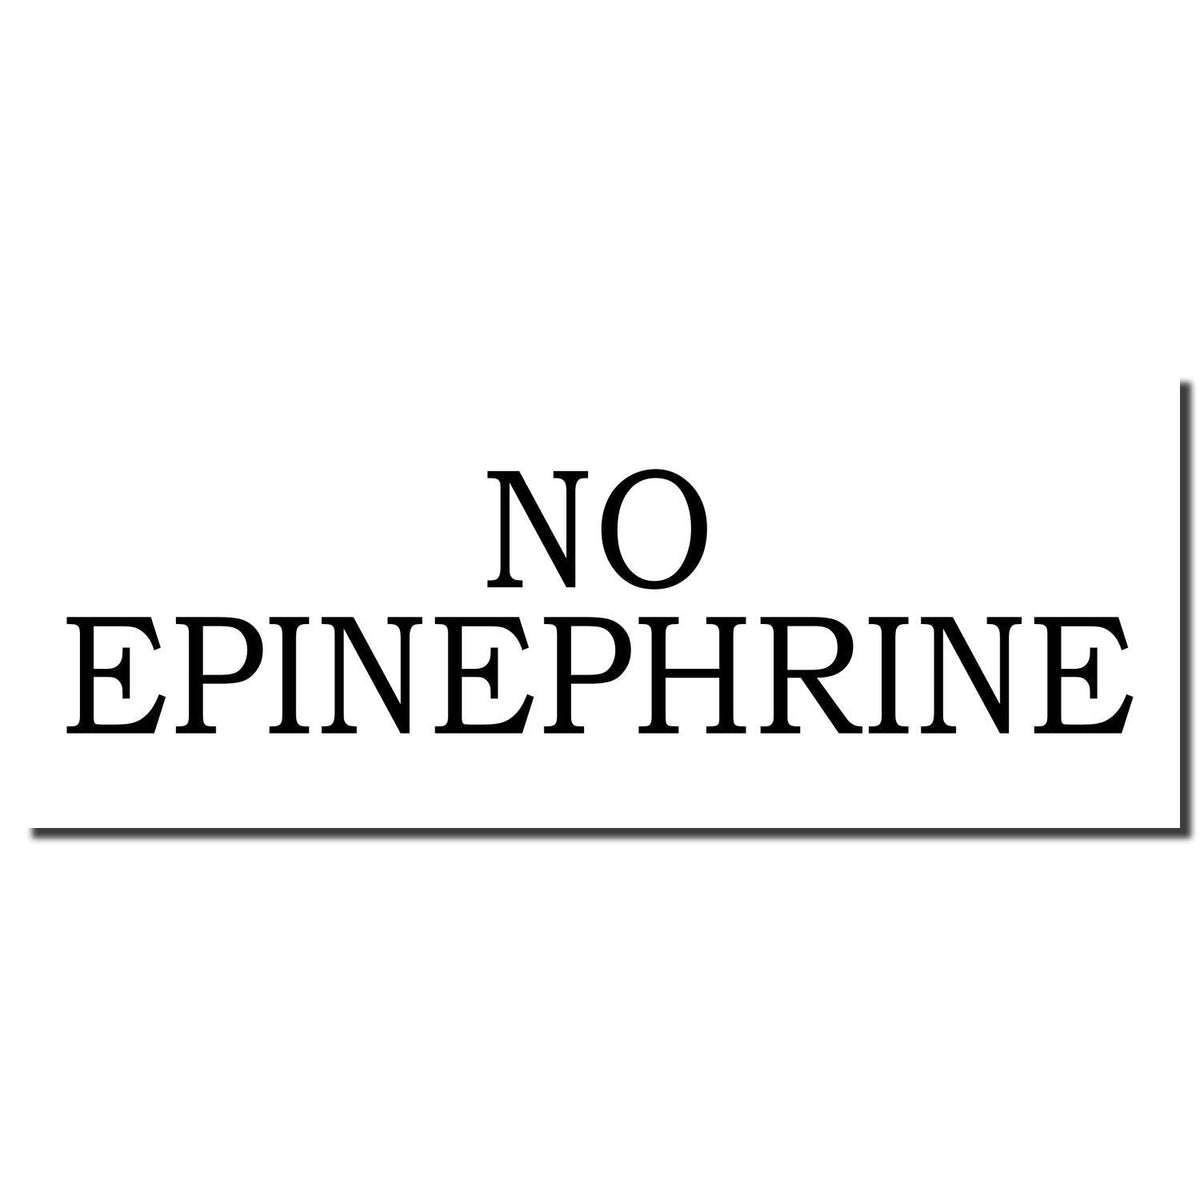 Enlarged Imprint Self Inking No Epinephrine Stamp Sample